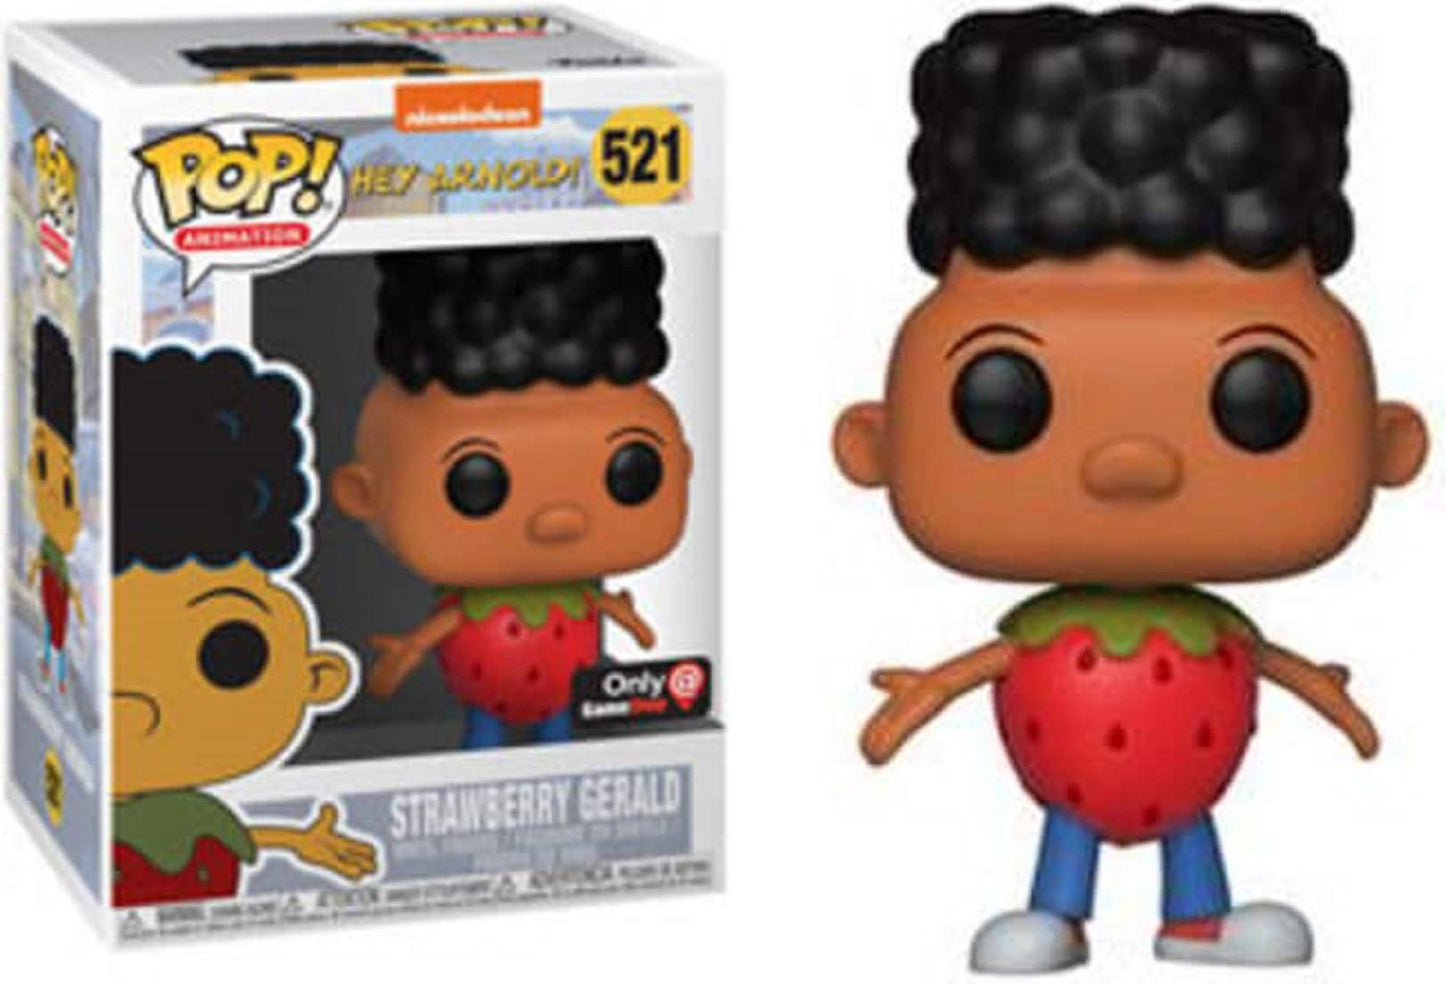 Funko POP! Hey Arnold! Strawberry Gerald Exclusive